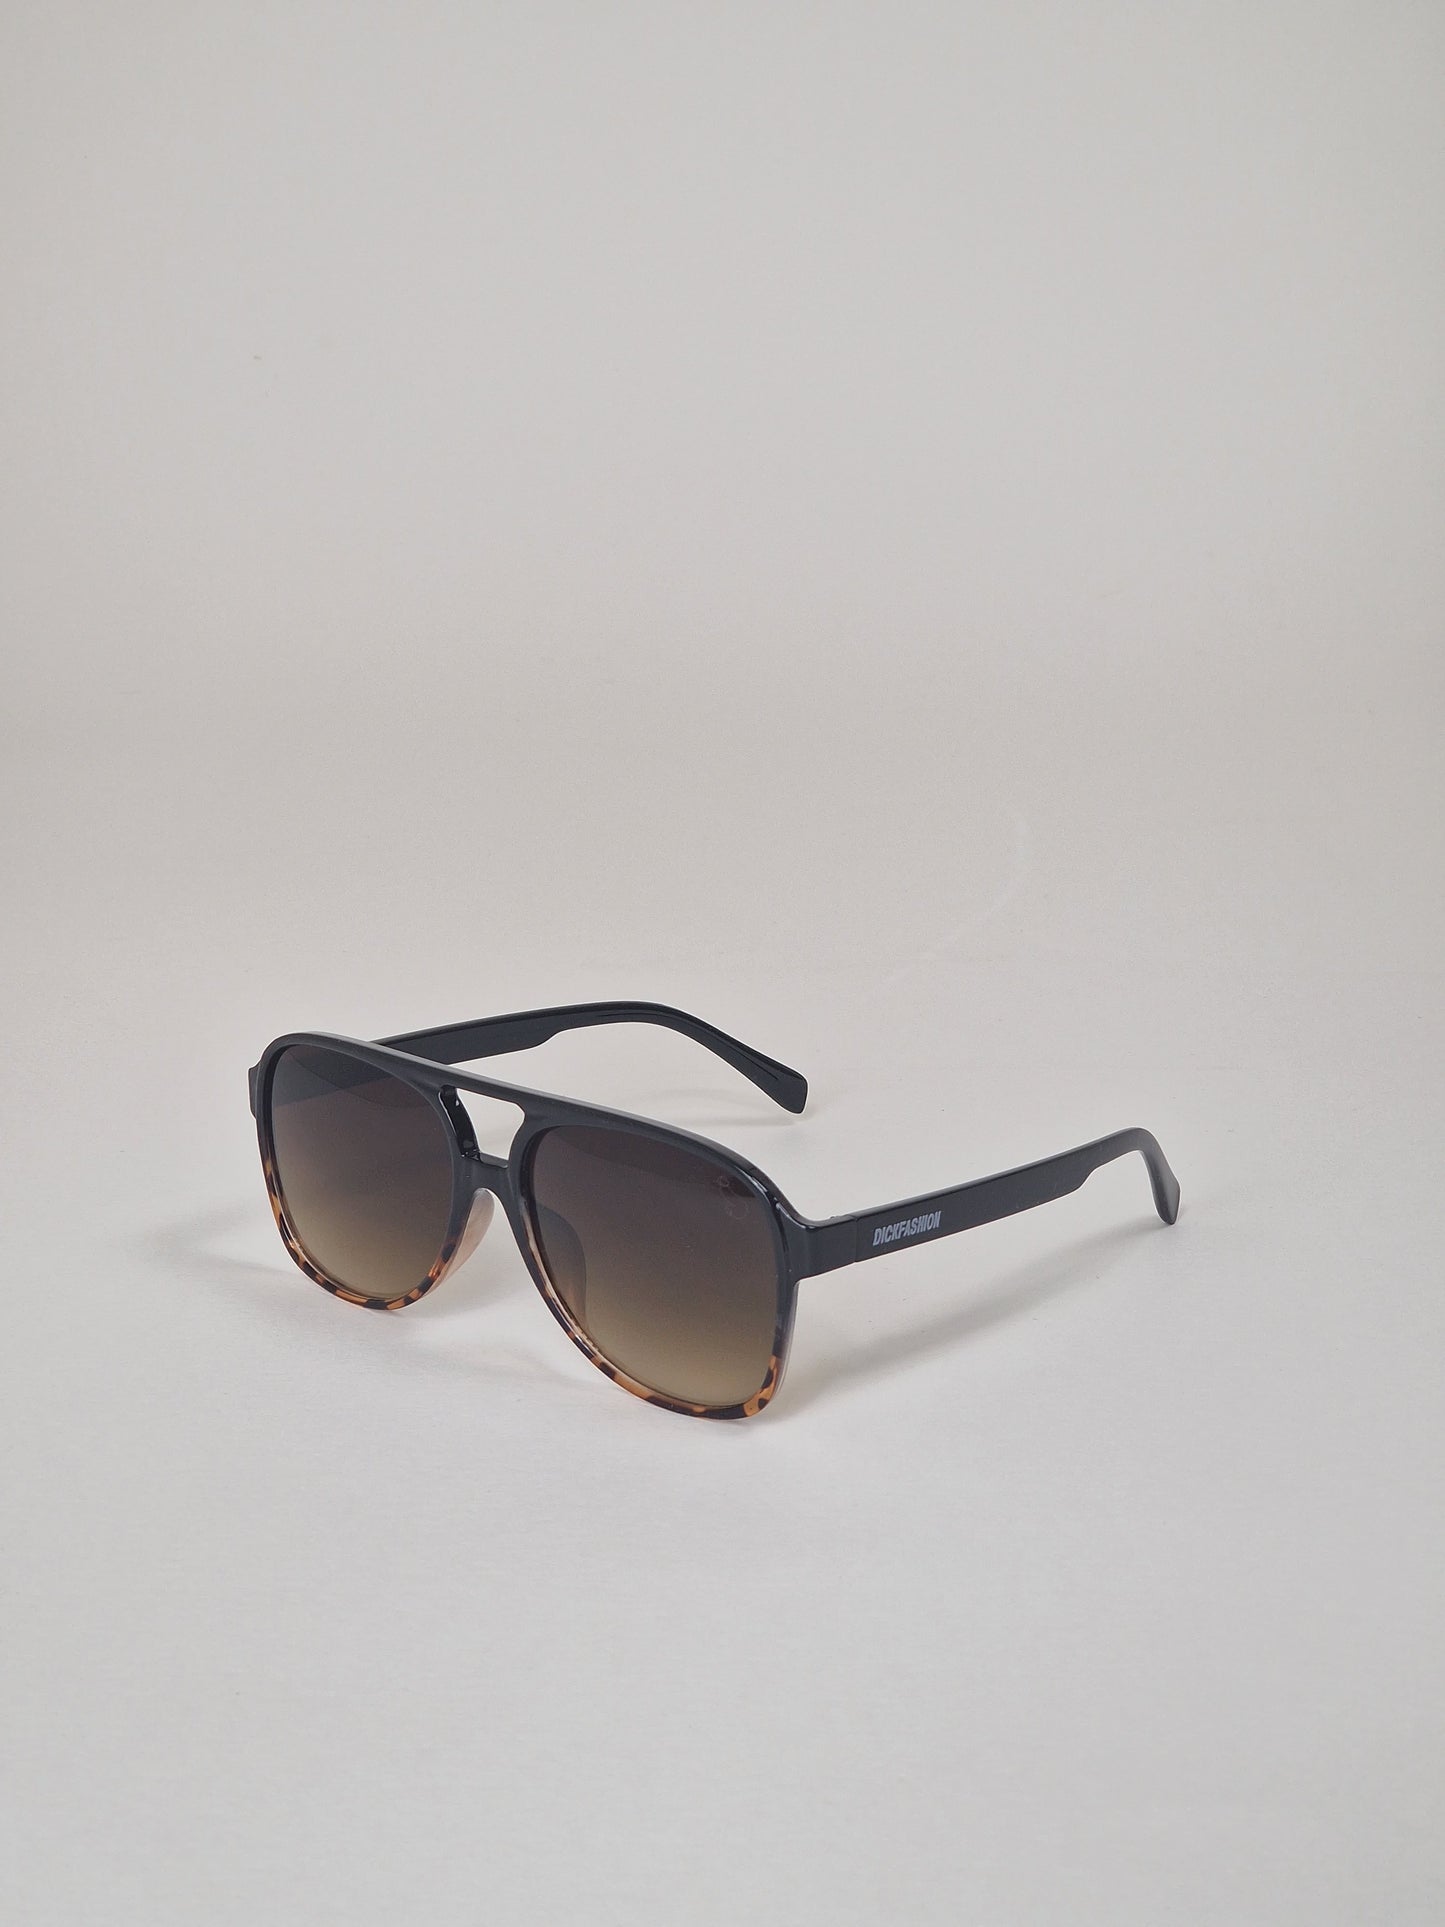 Sunglasses, model 46 - Brown tinted.